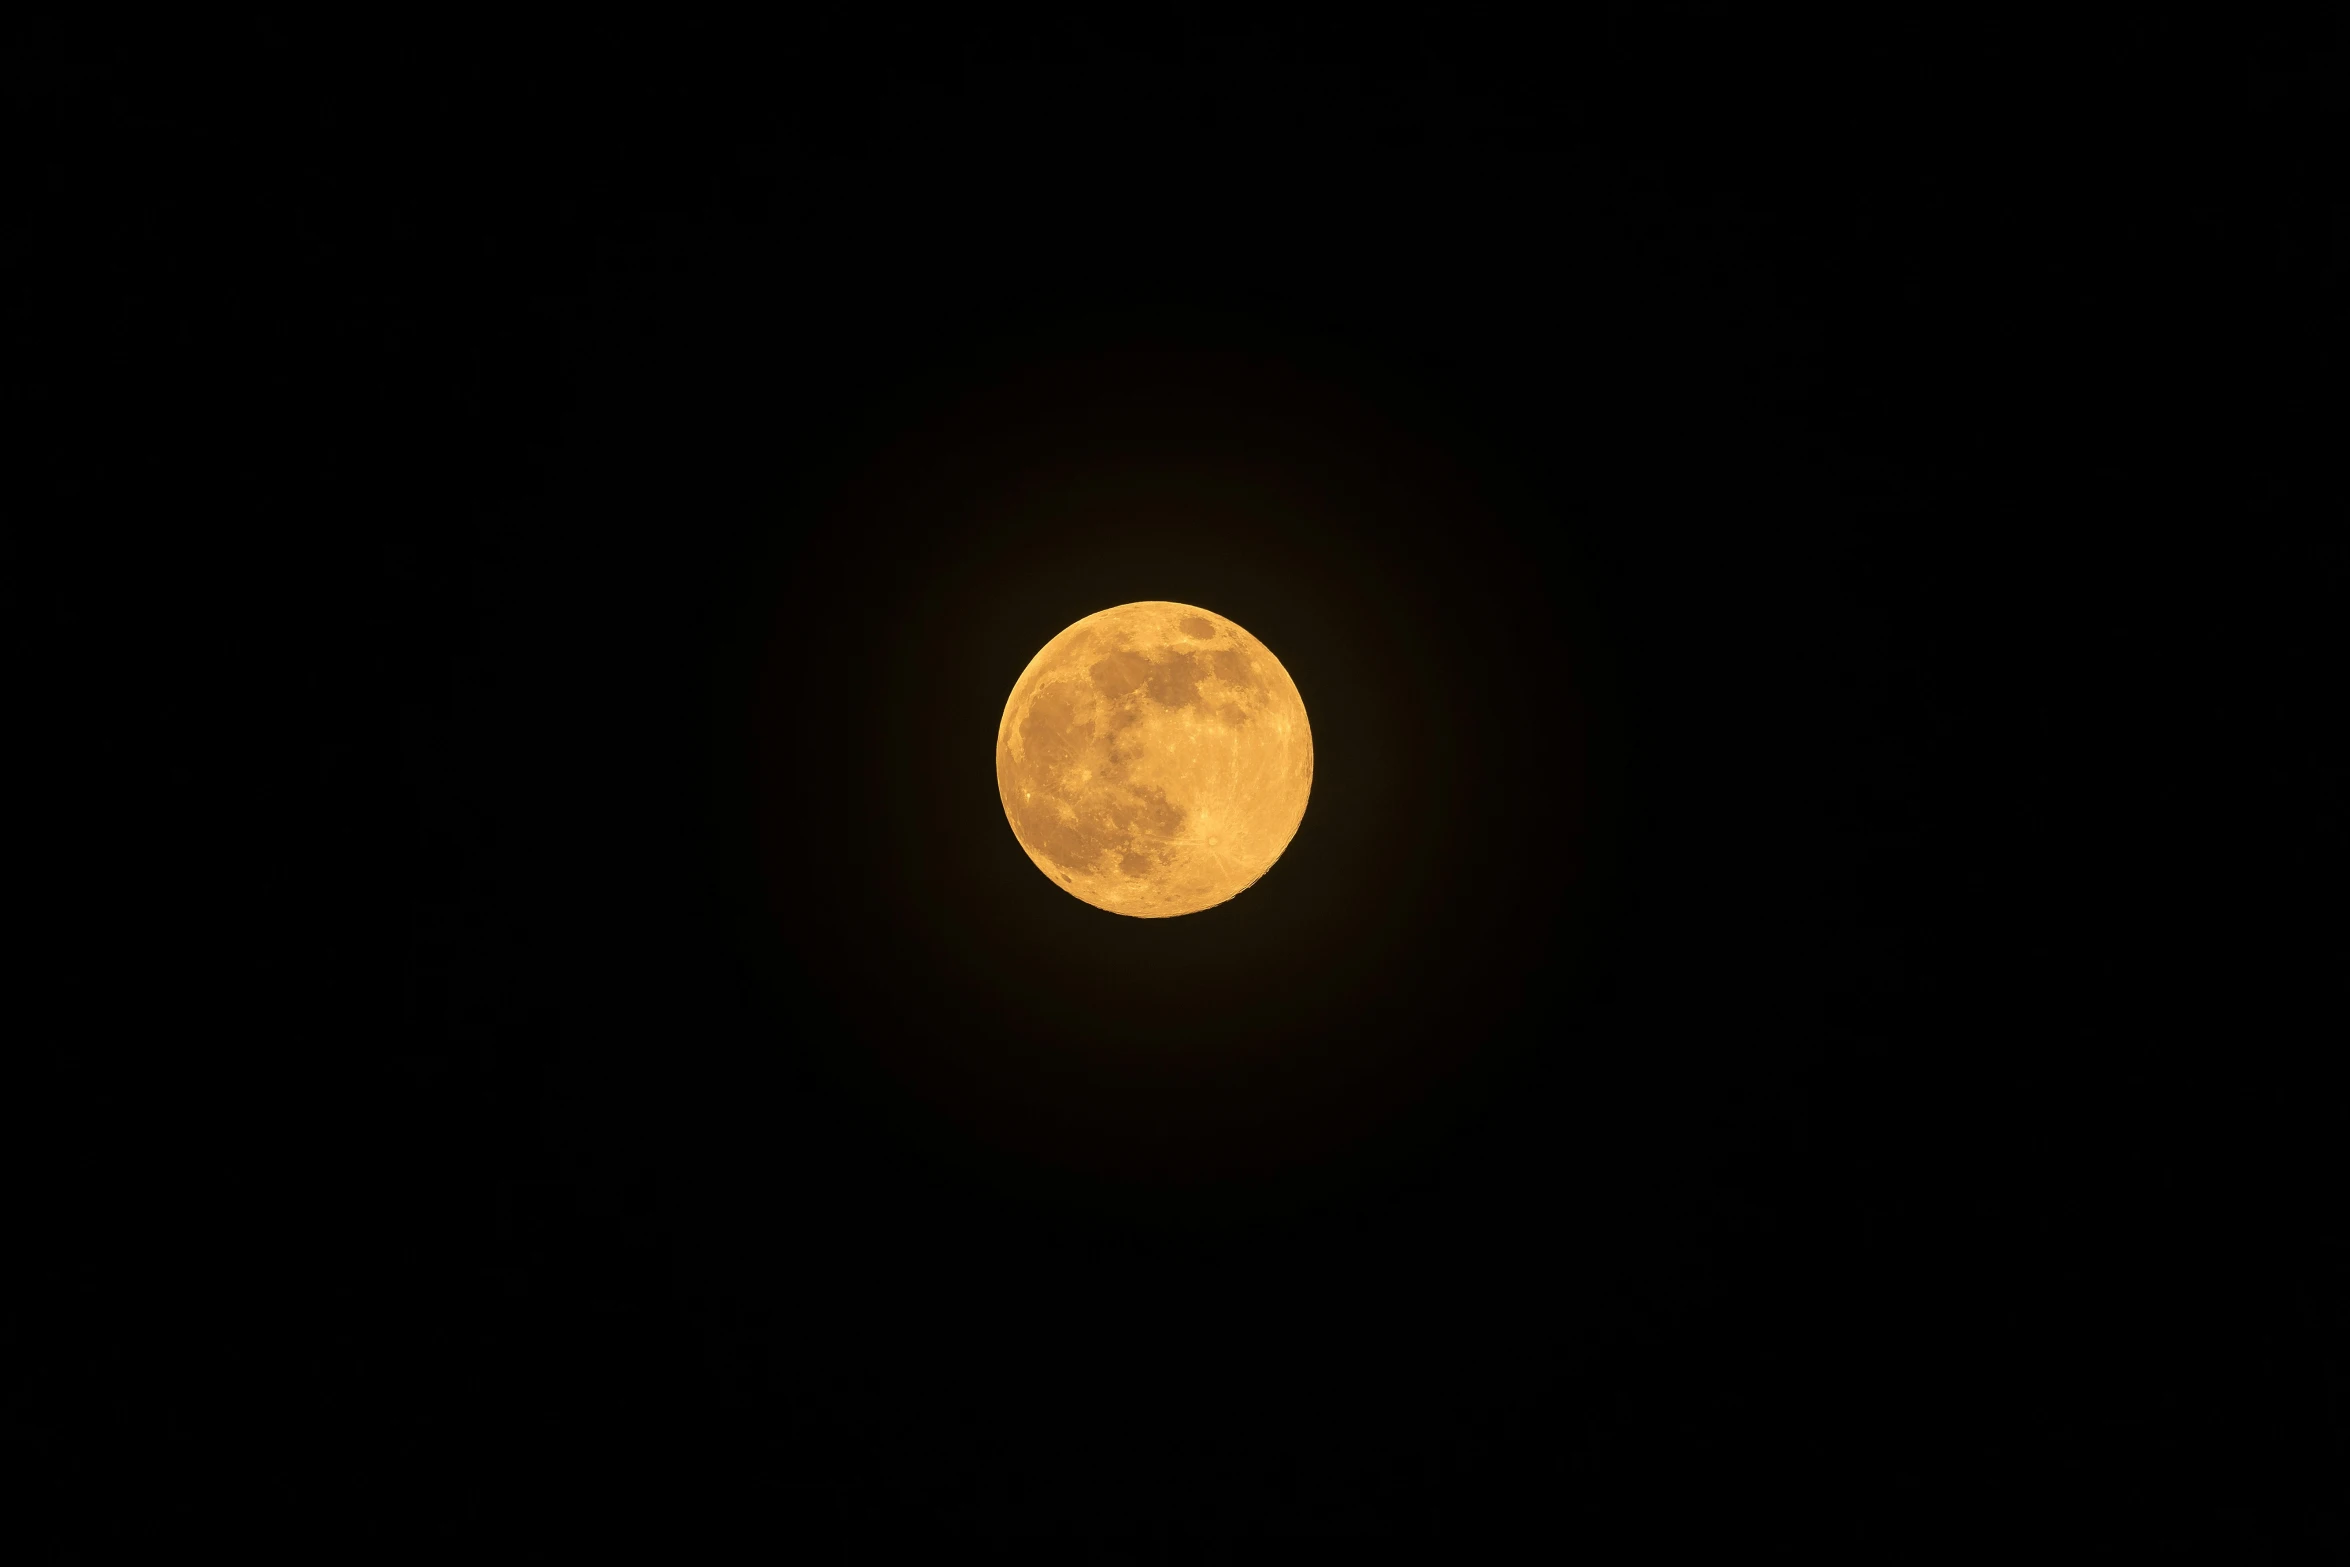 the bright orange moon has just taken off